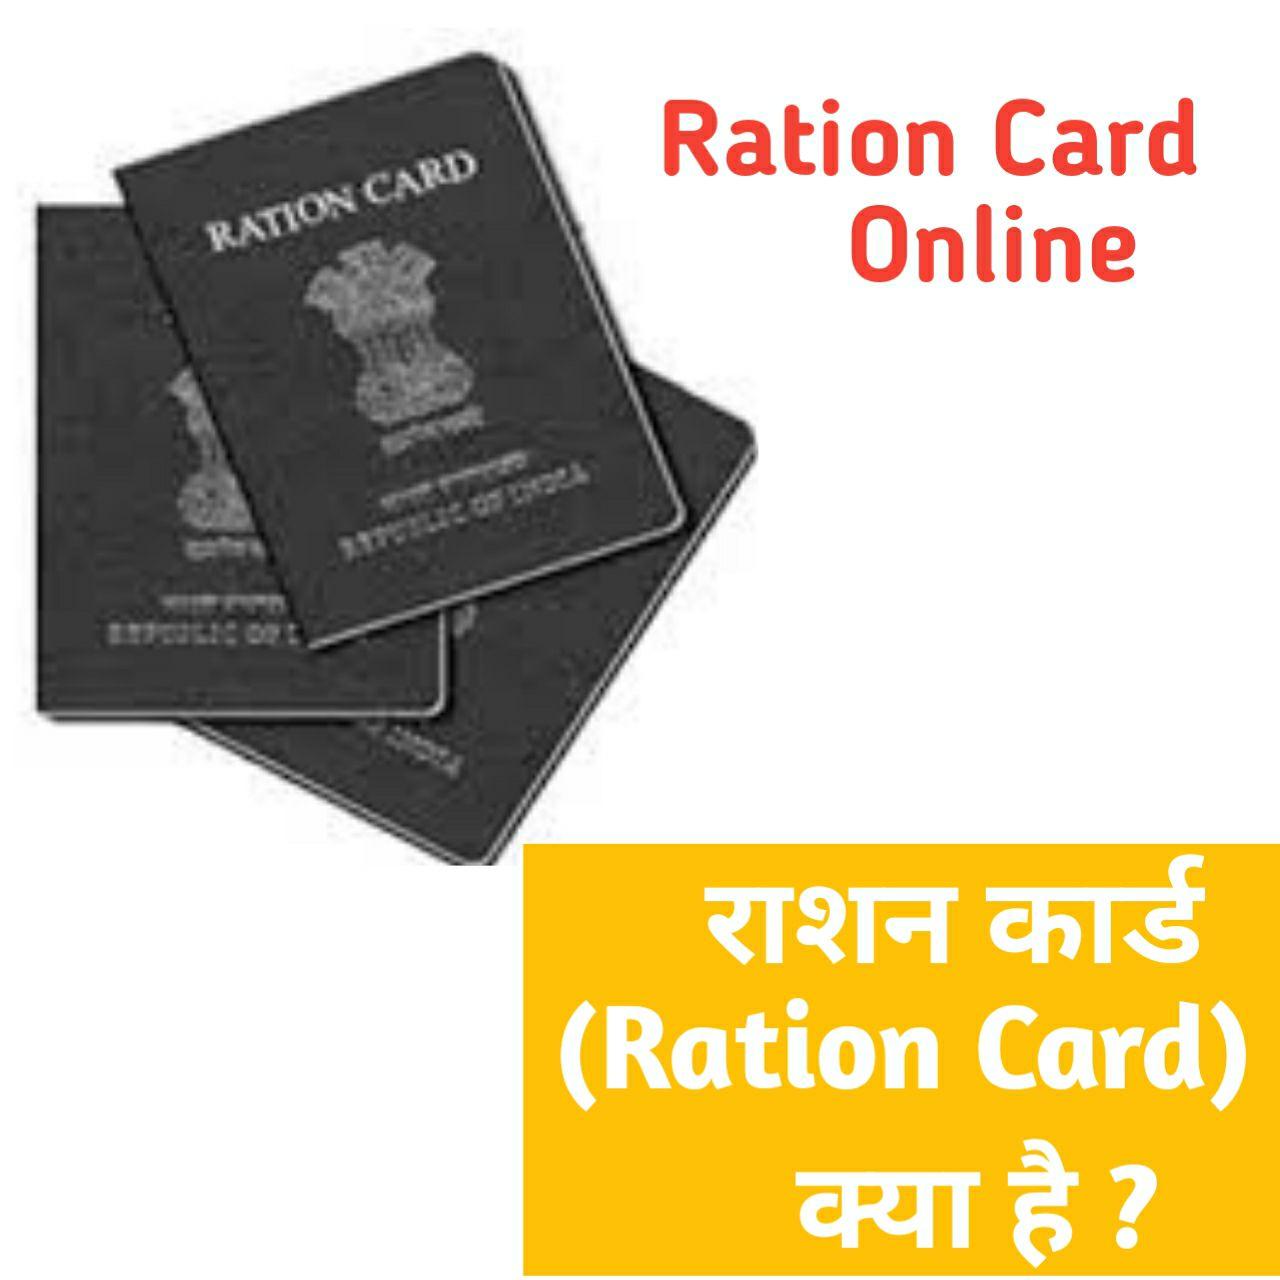 राशन कार्ड (Ration Card) 